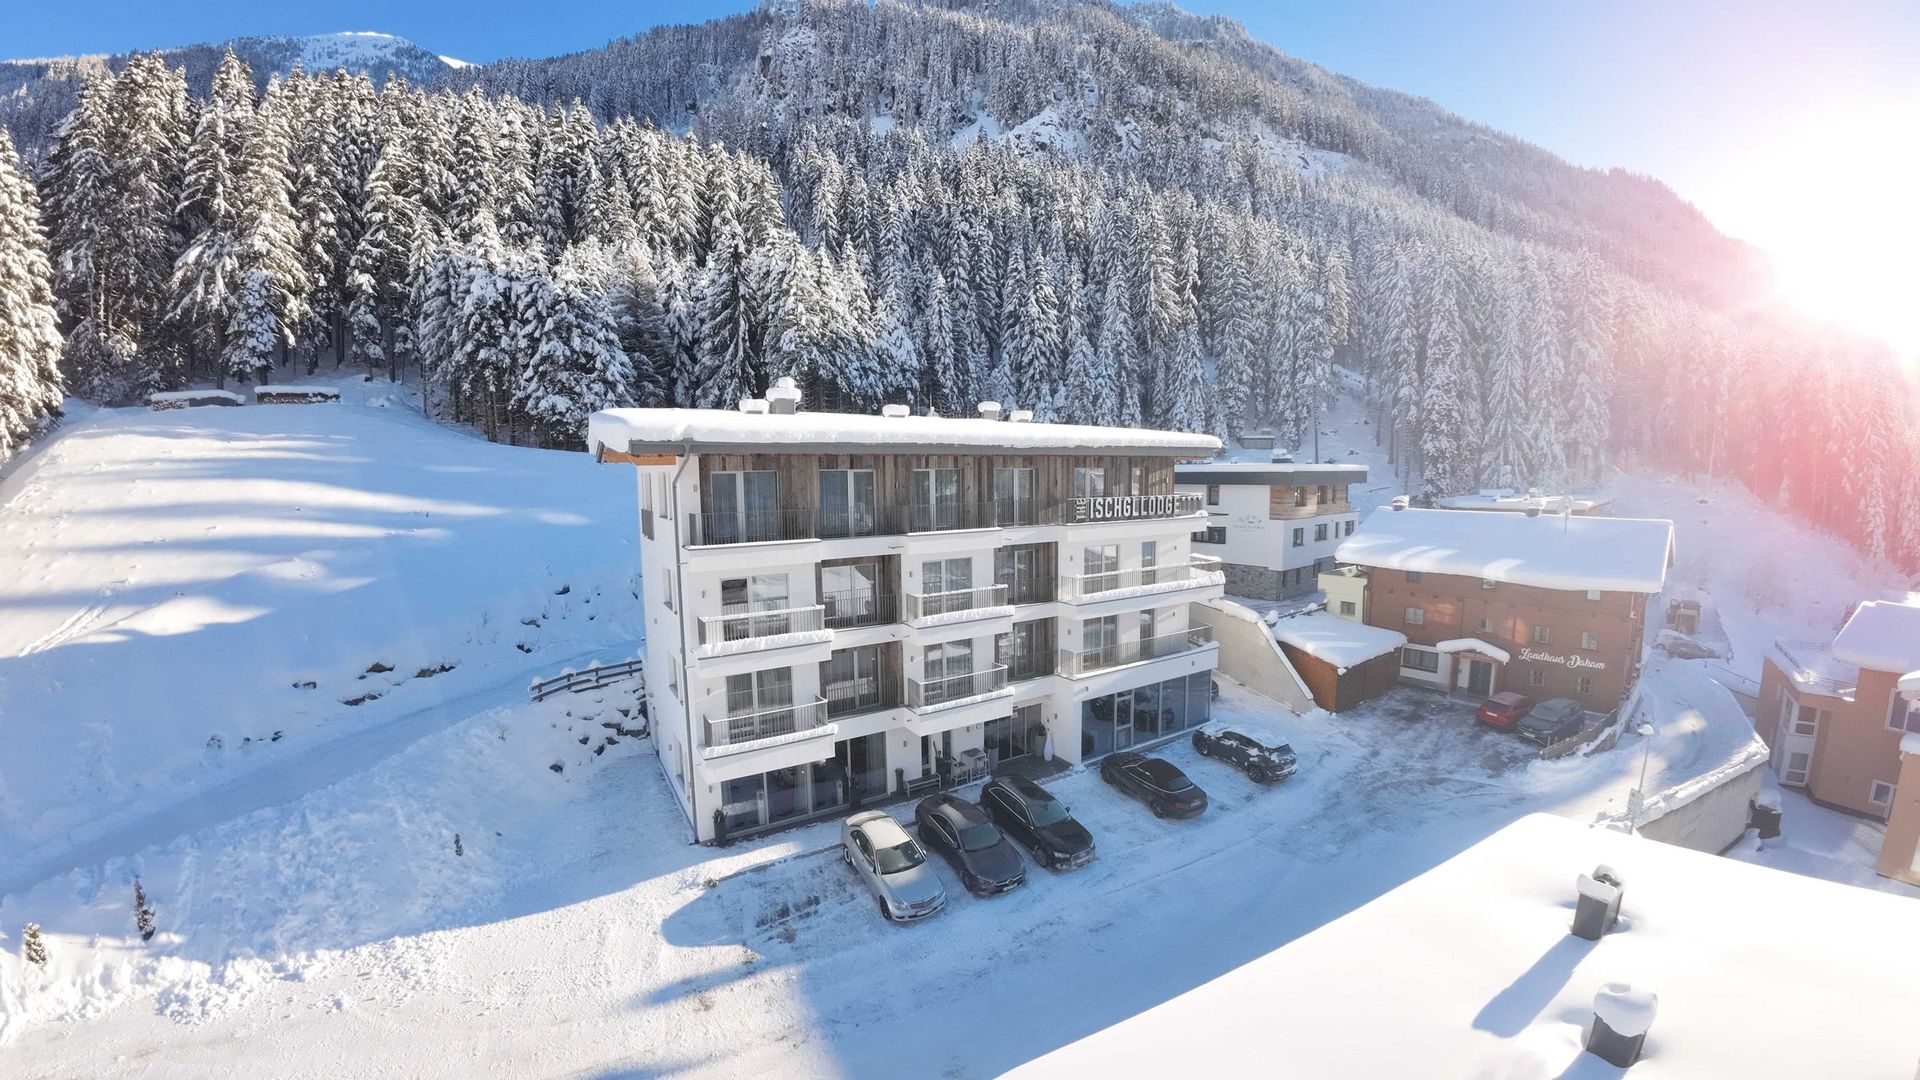 The Ischgl Lodge - Sankt Anton am Arlberg